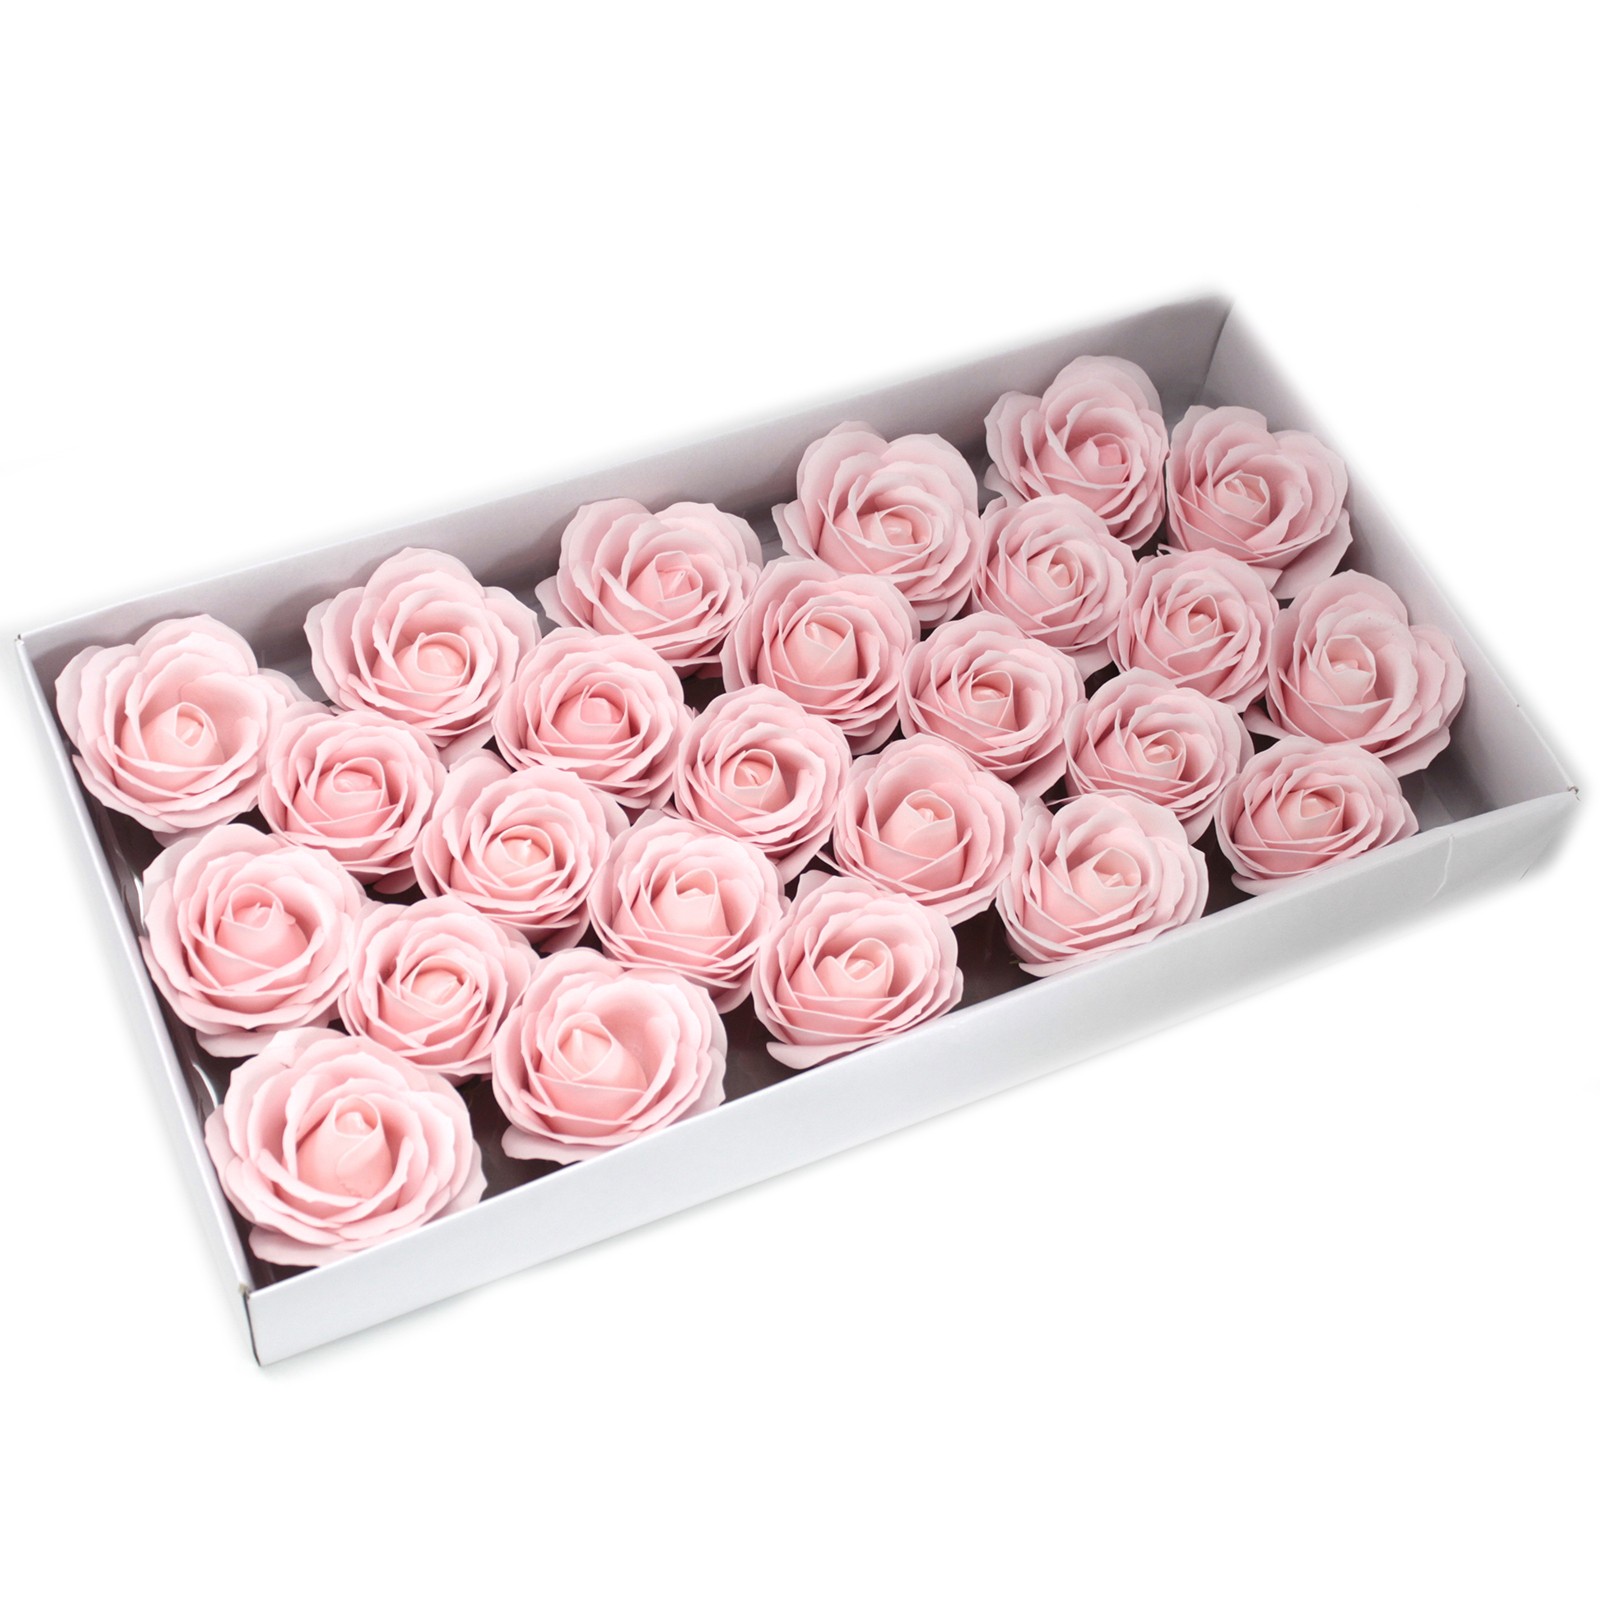 Craft Soap Flowers - Lrg Rose - Pink